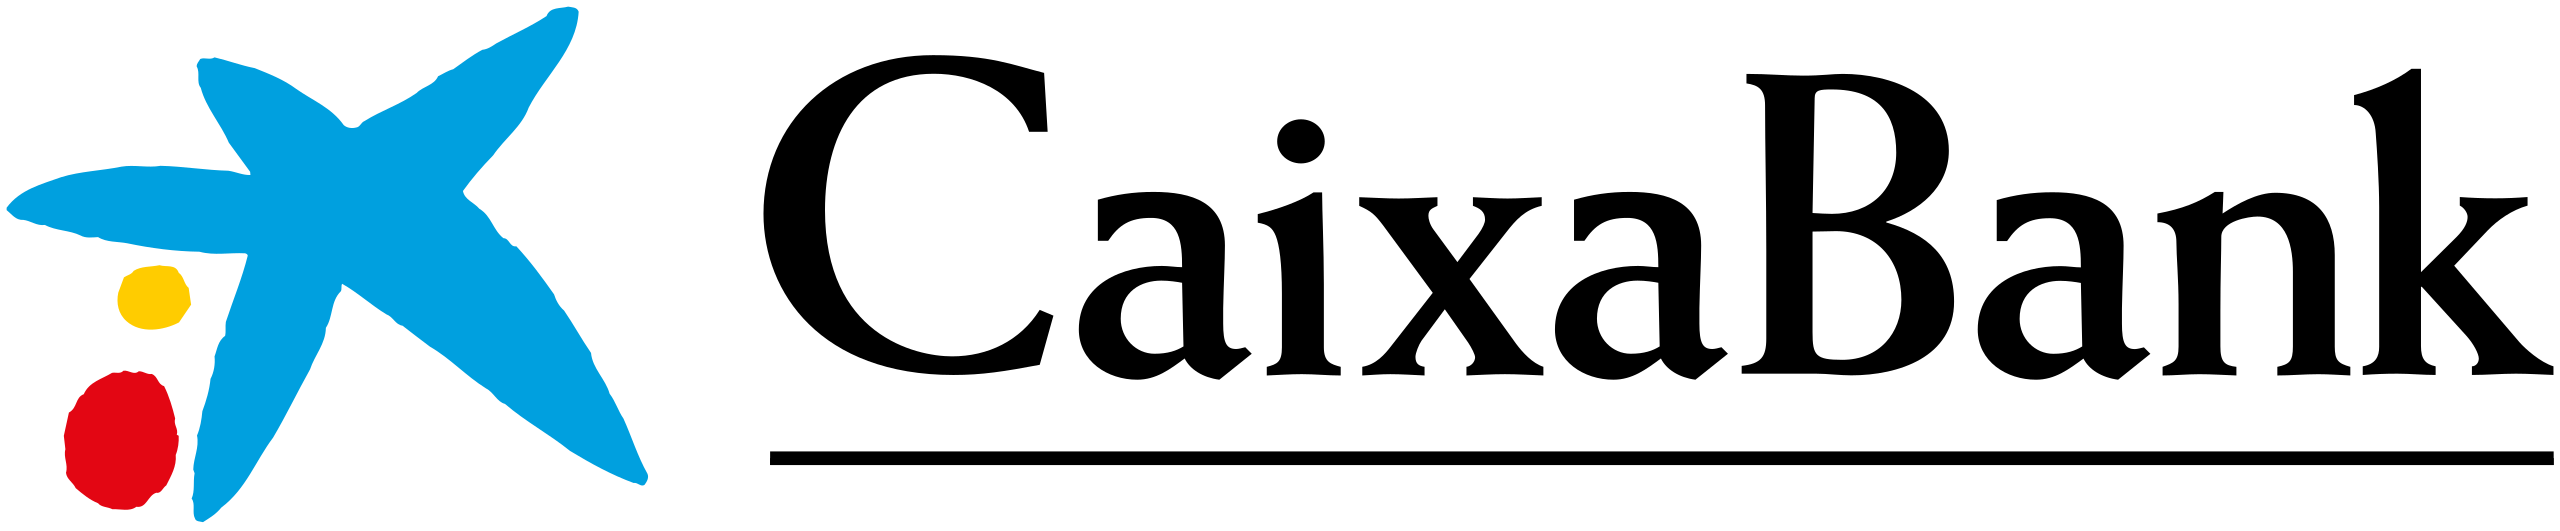 2560px-CaixaBank_logo.svg